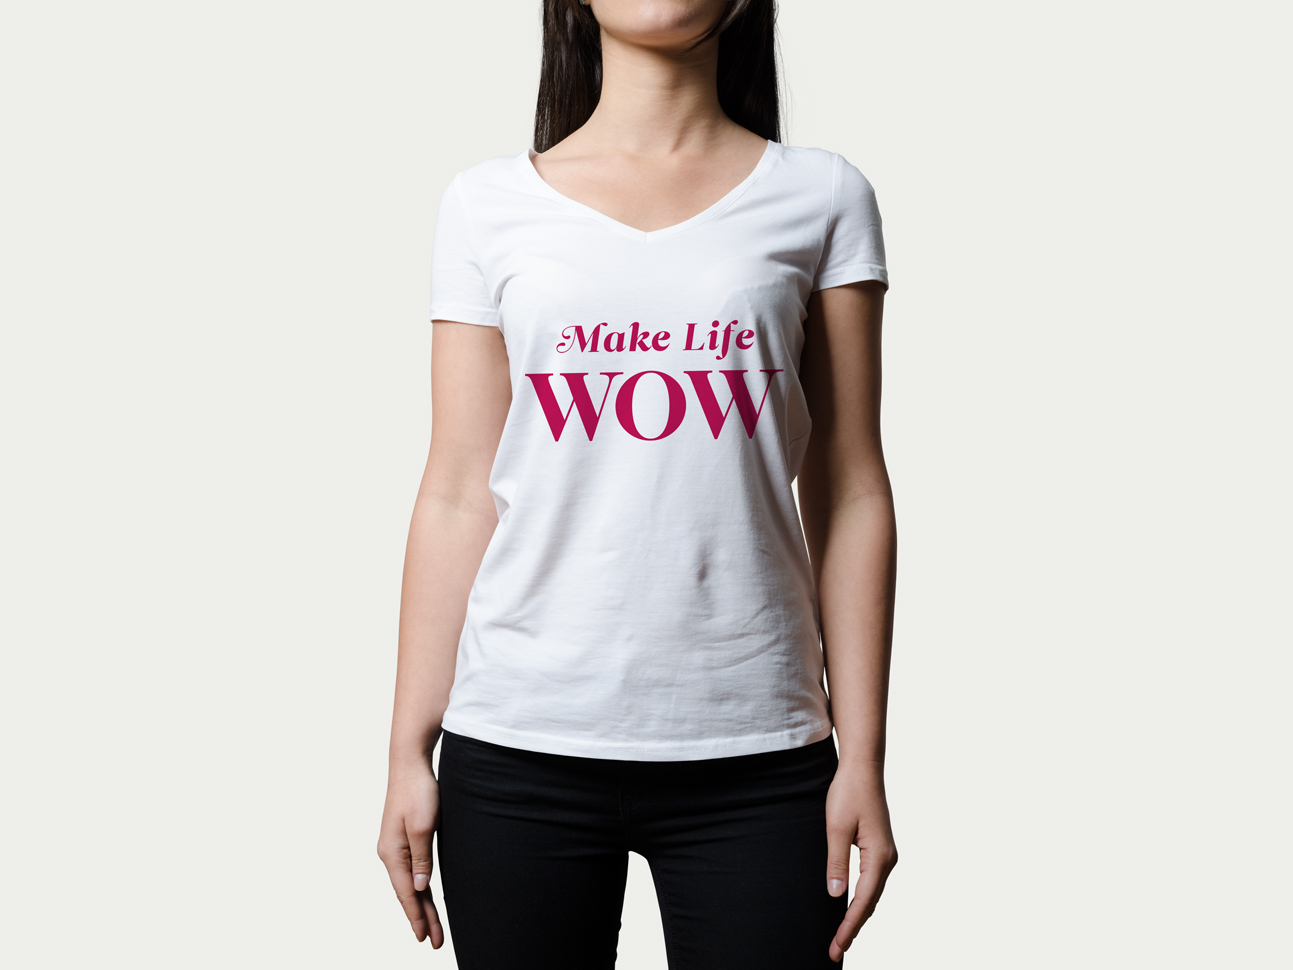 martin zech design, t-shirt, self publishing, lydia werner, make life wow